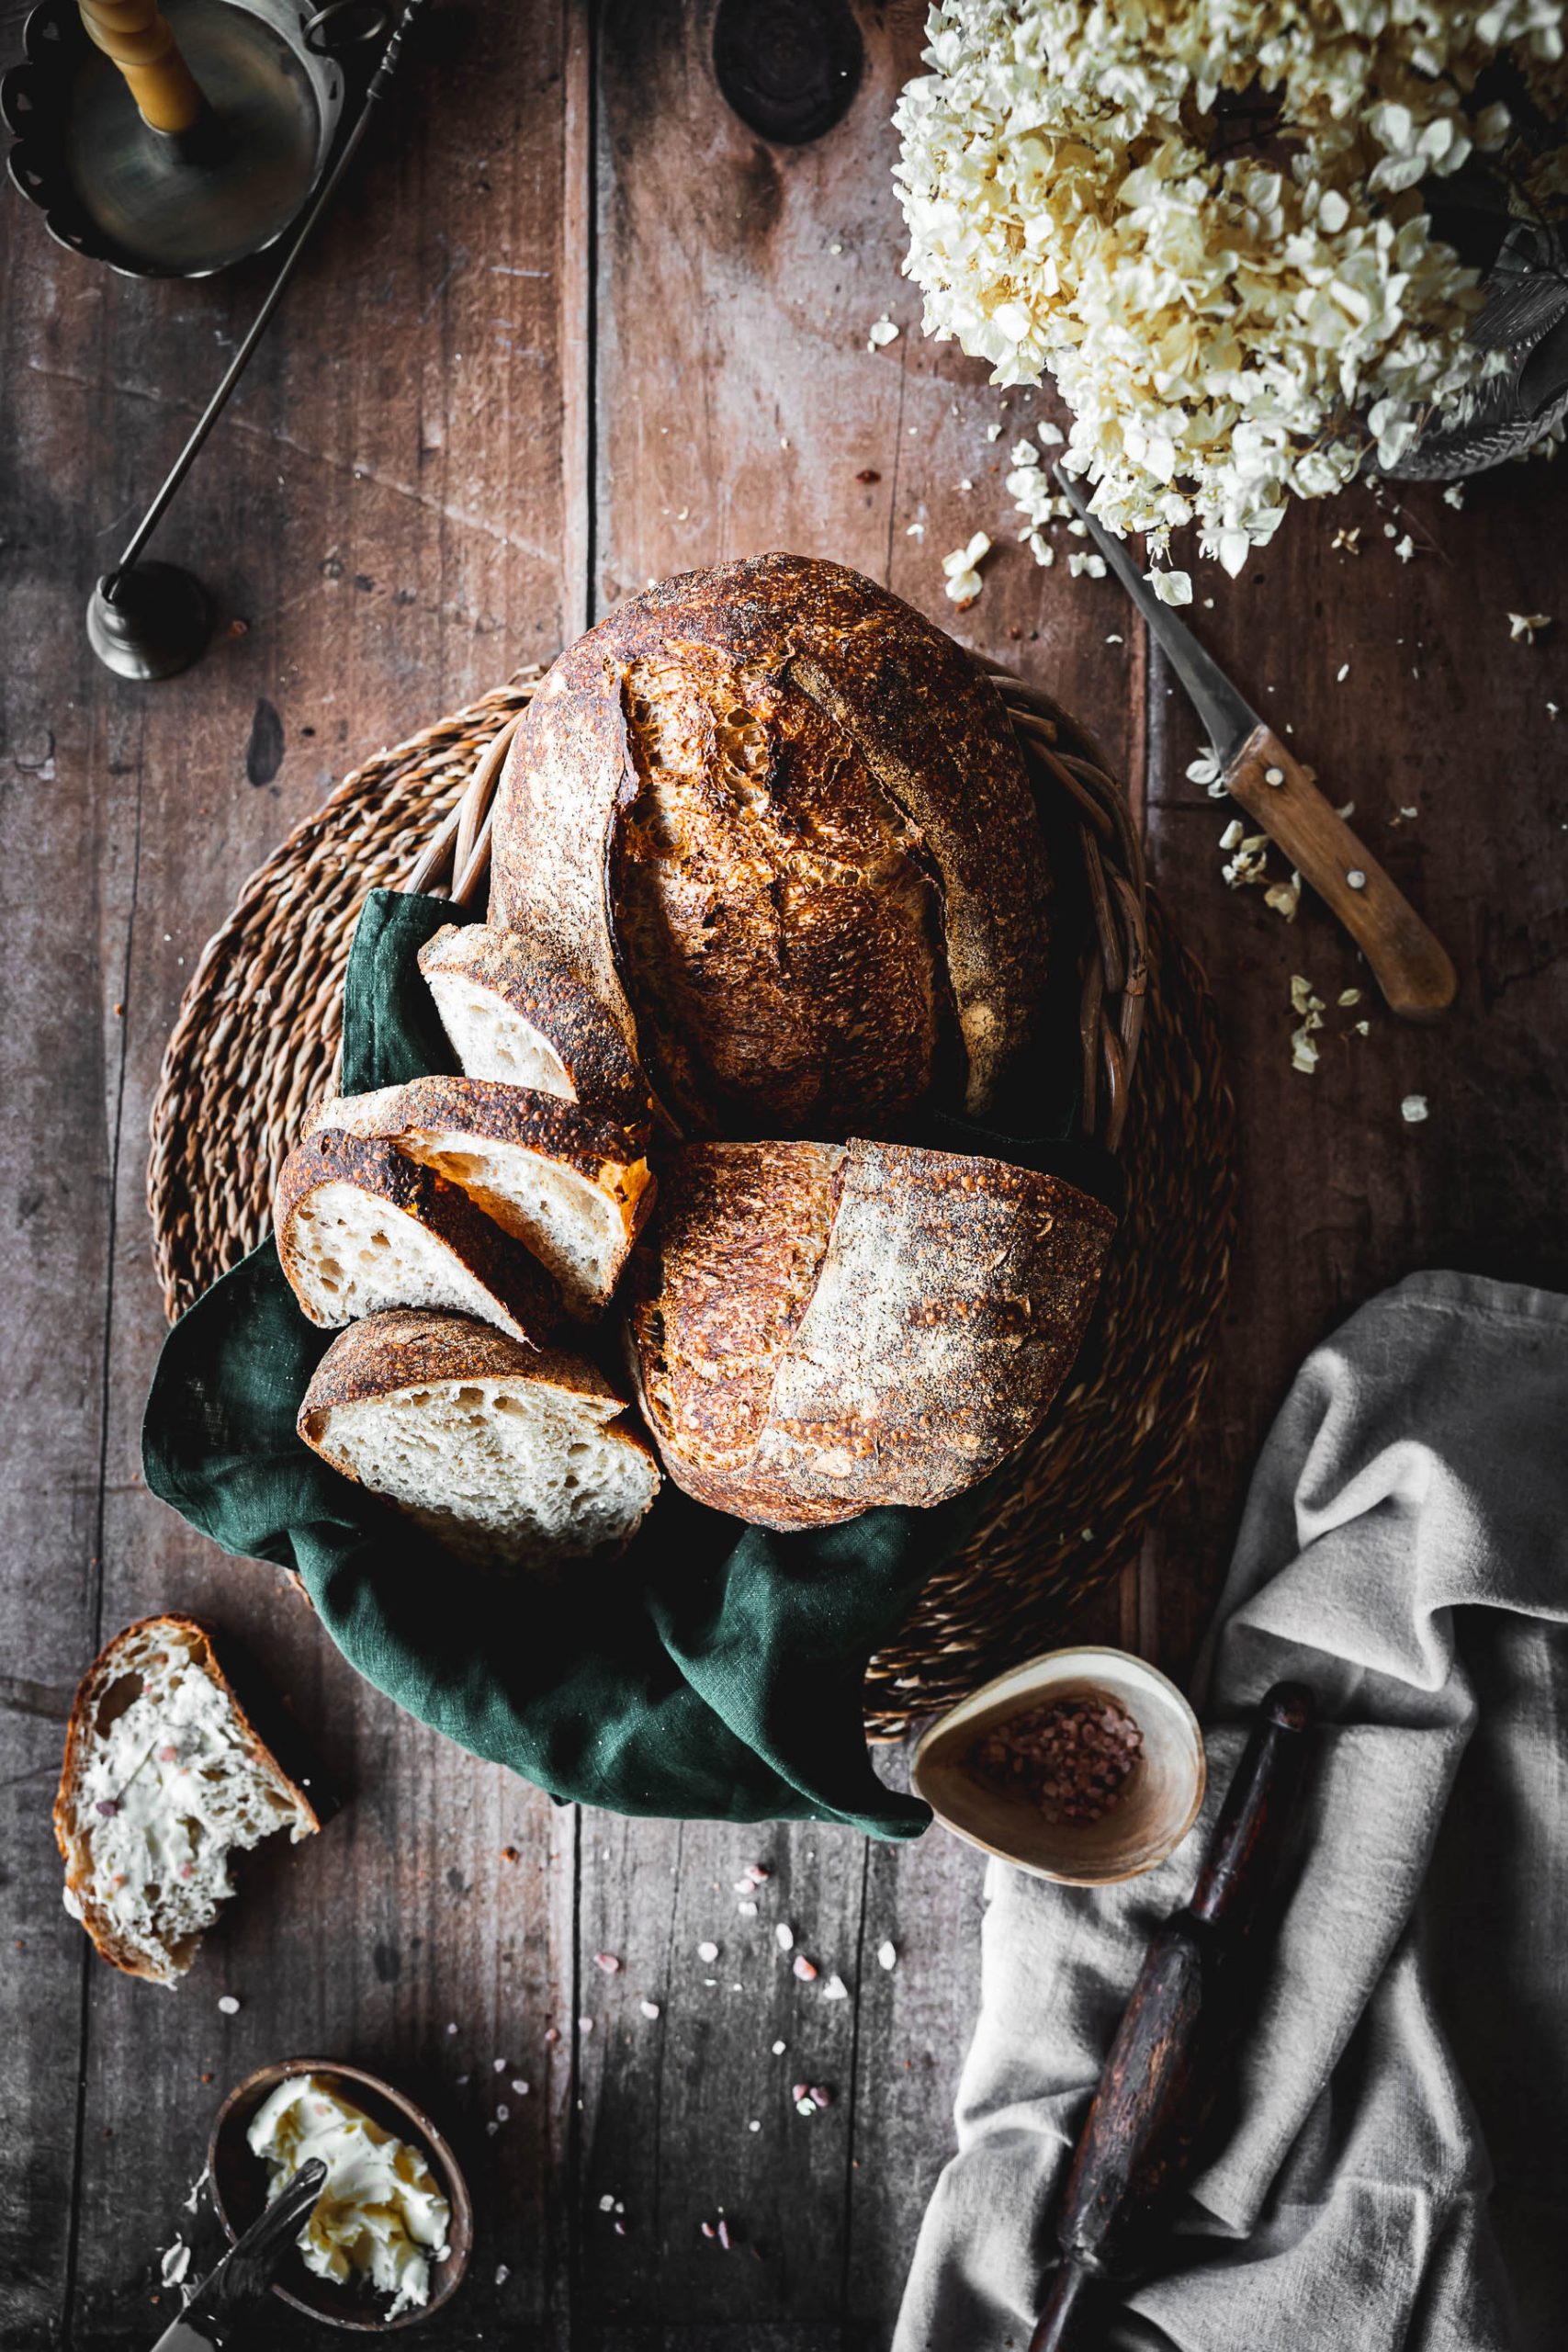 Sourdough bread food photography by Zuzana Rainet from Bratislava Slovakia